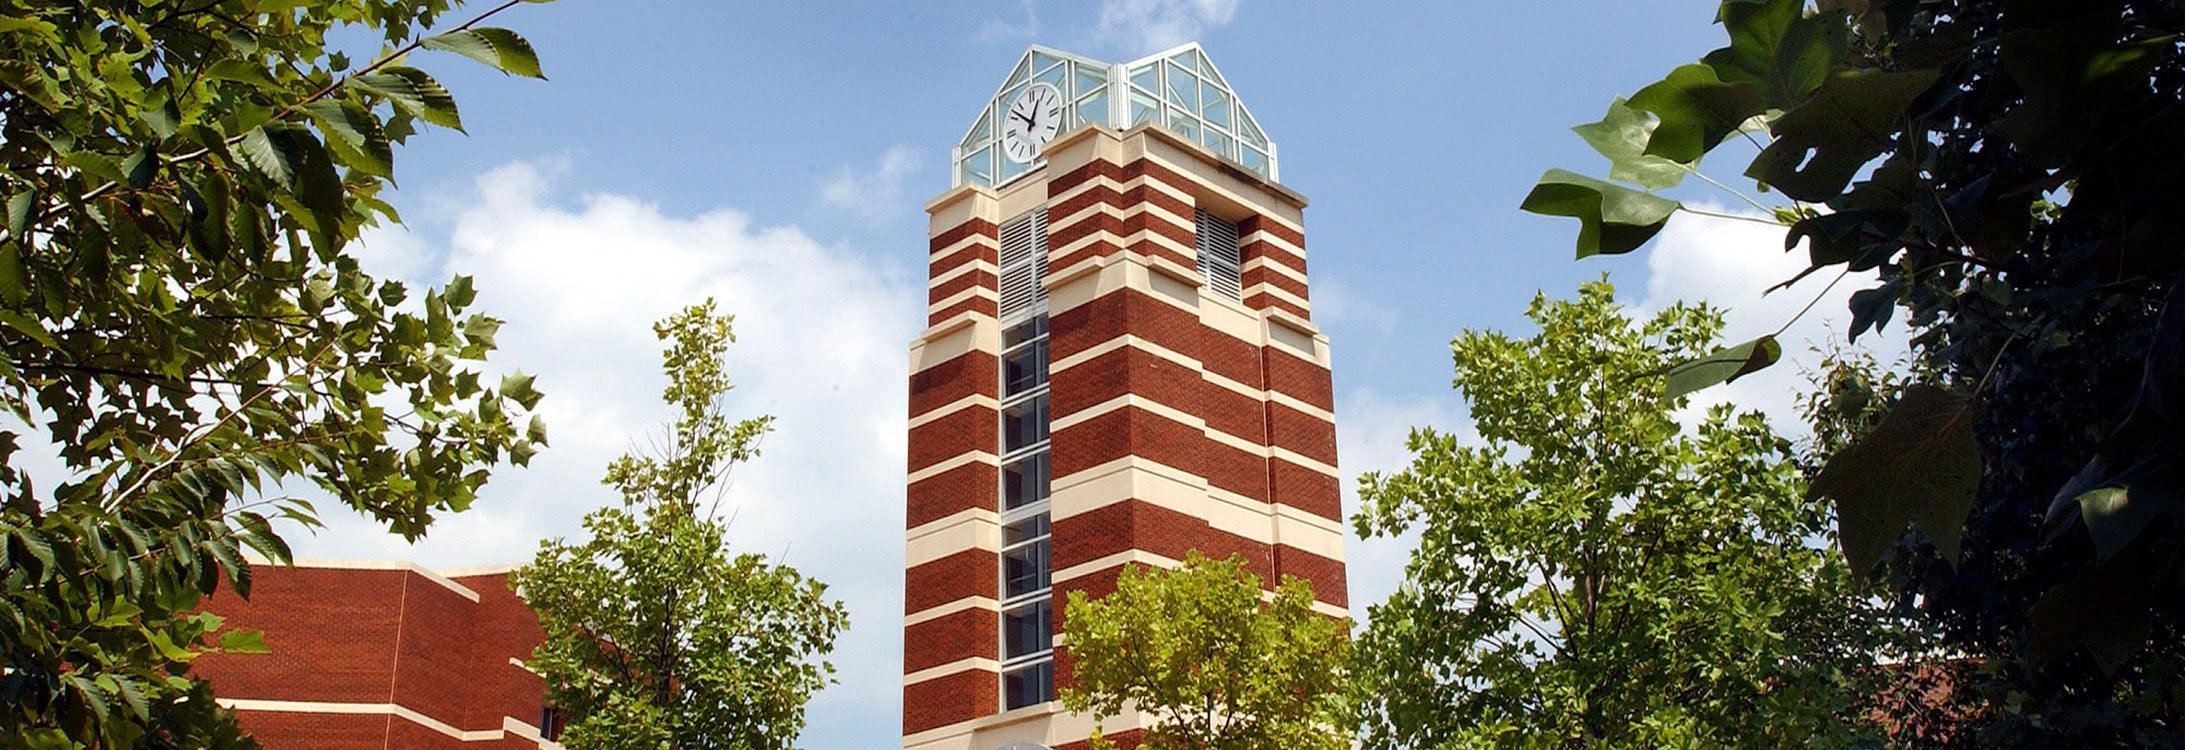 Image of clock tower on main campus near Joyner Libray